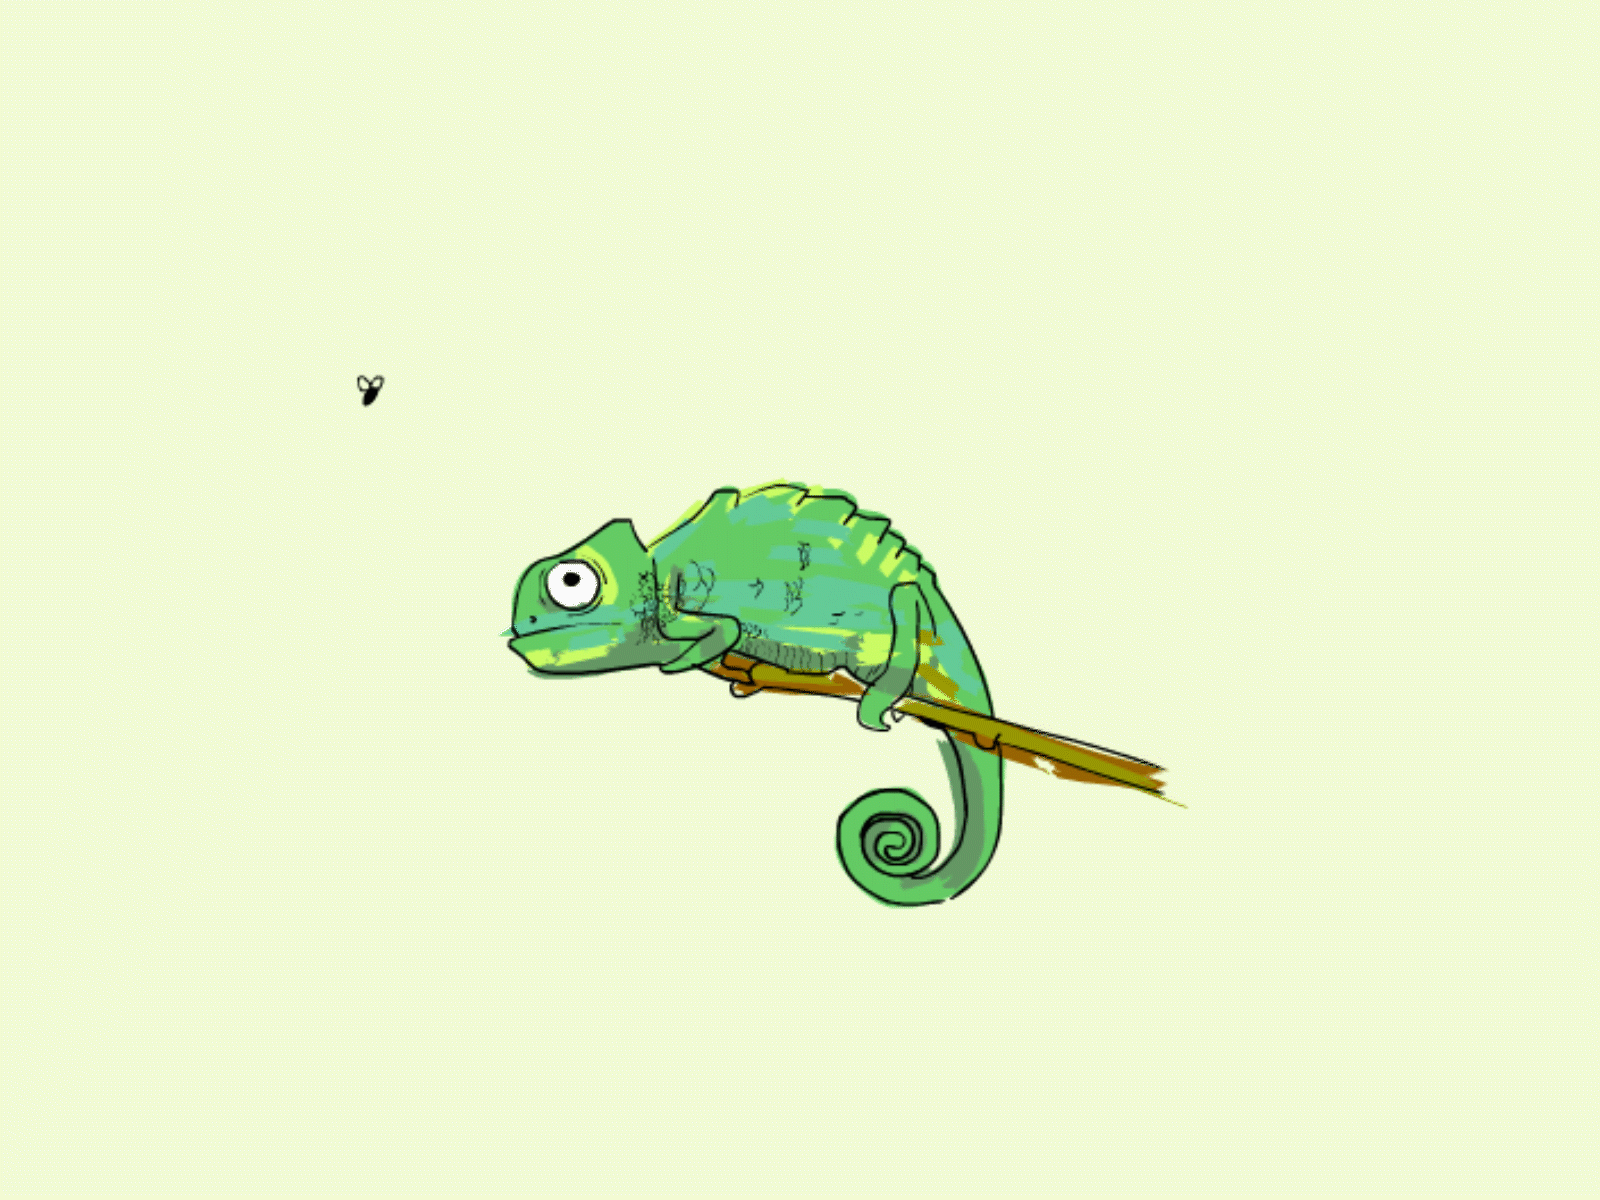 Chameleon frame to frame animation animated gif animation framebyframe